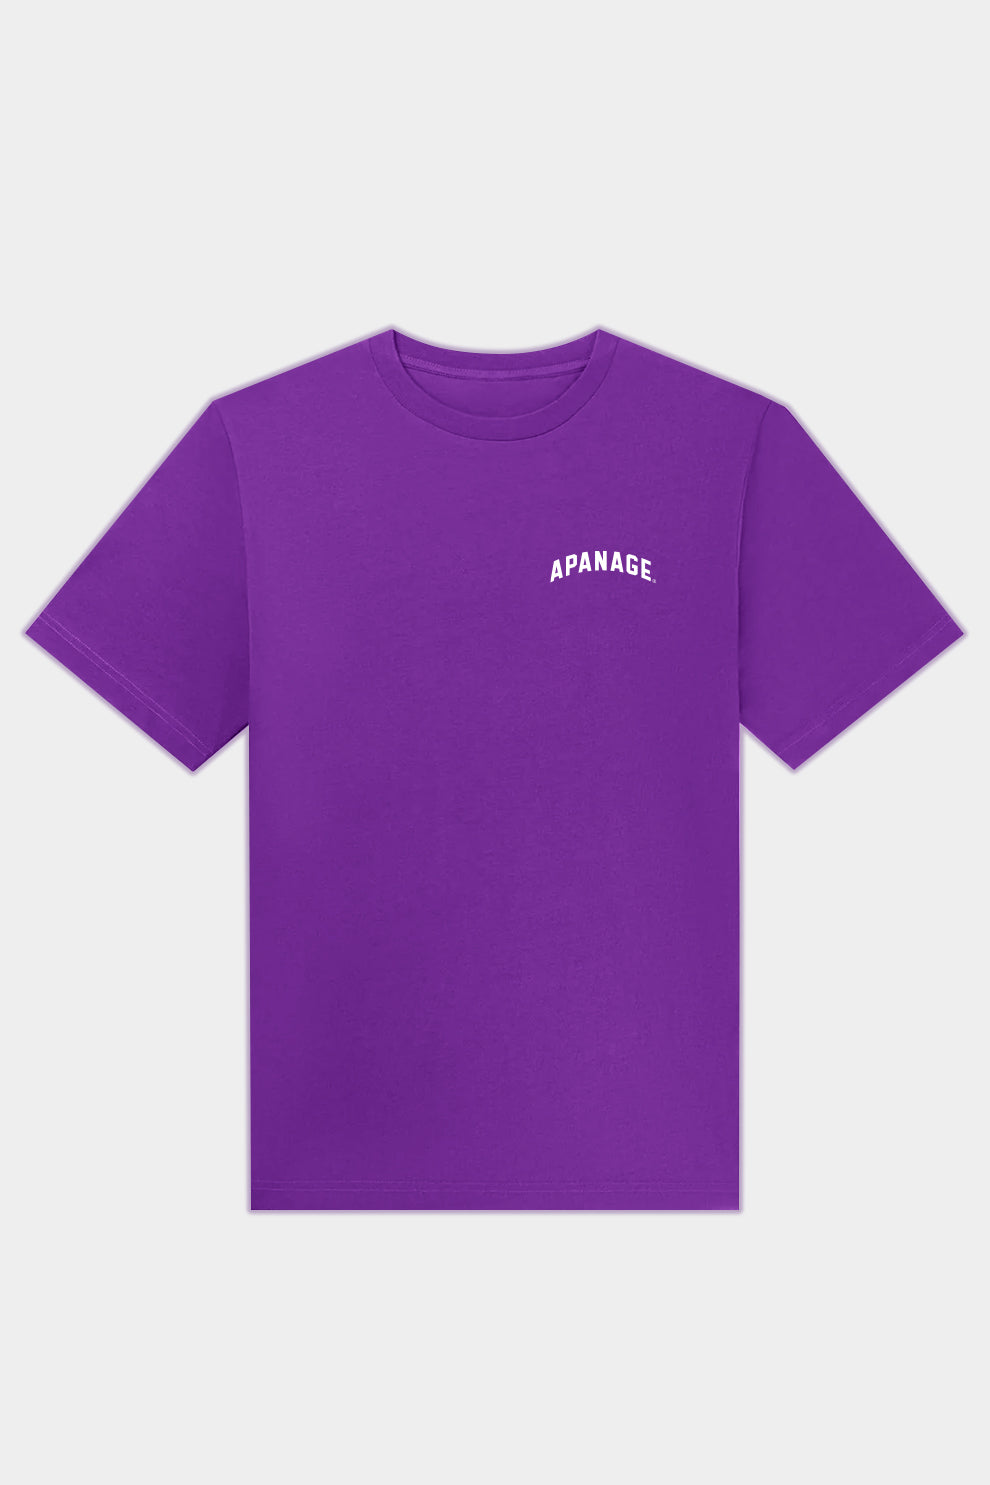 T-shirt Apanage - S01 - Violet (S)